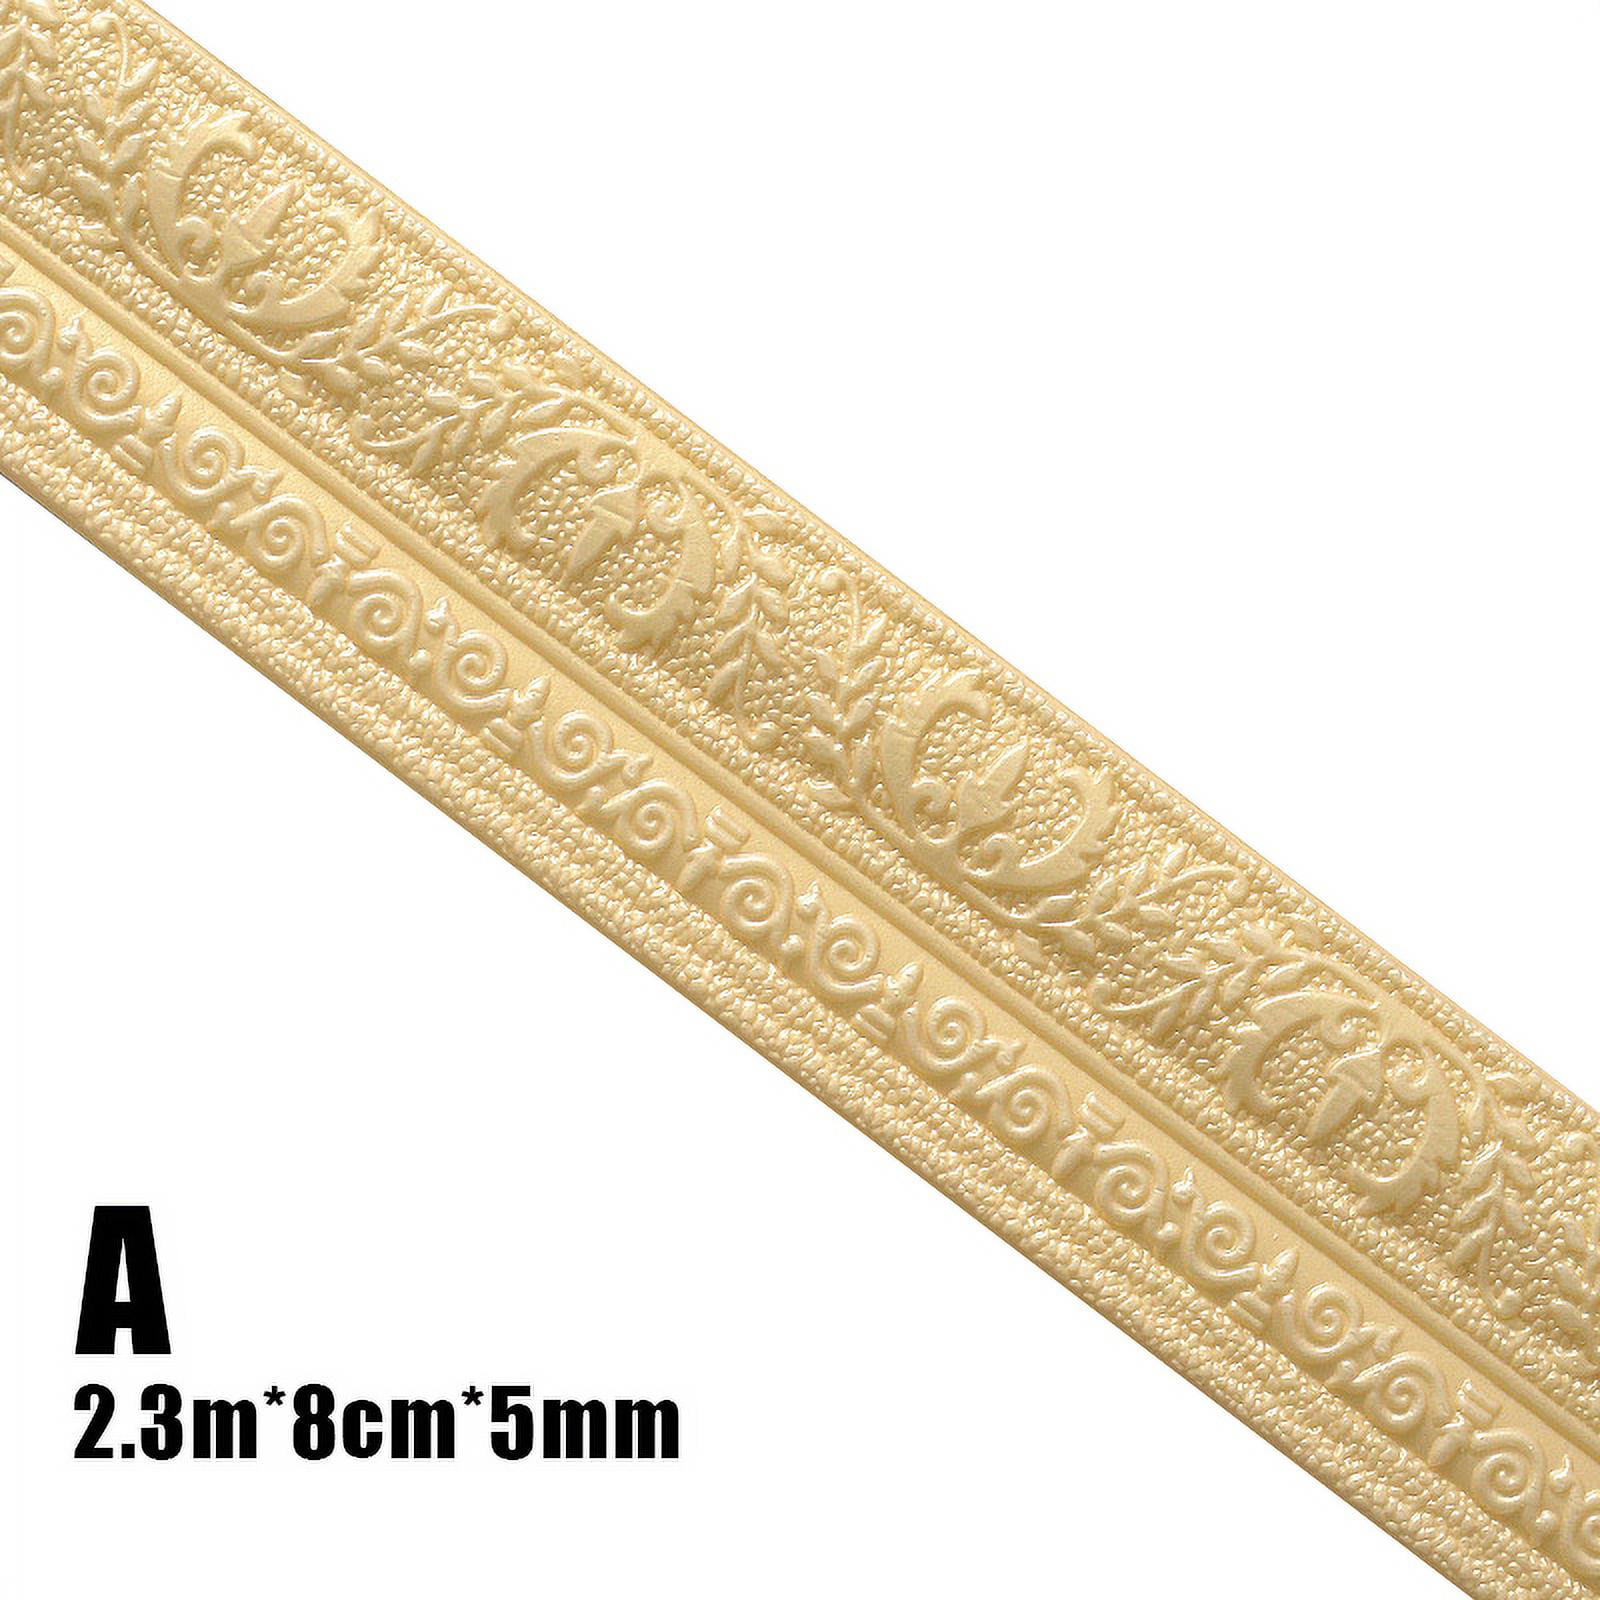 3D Pattern Wall Trim Line Skirting Border Waterproof Self-Adhesive Strip 2.3M